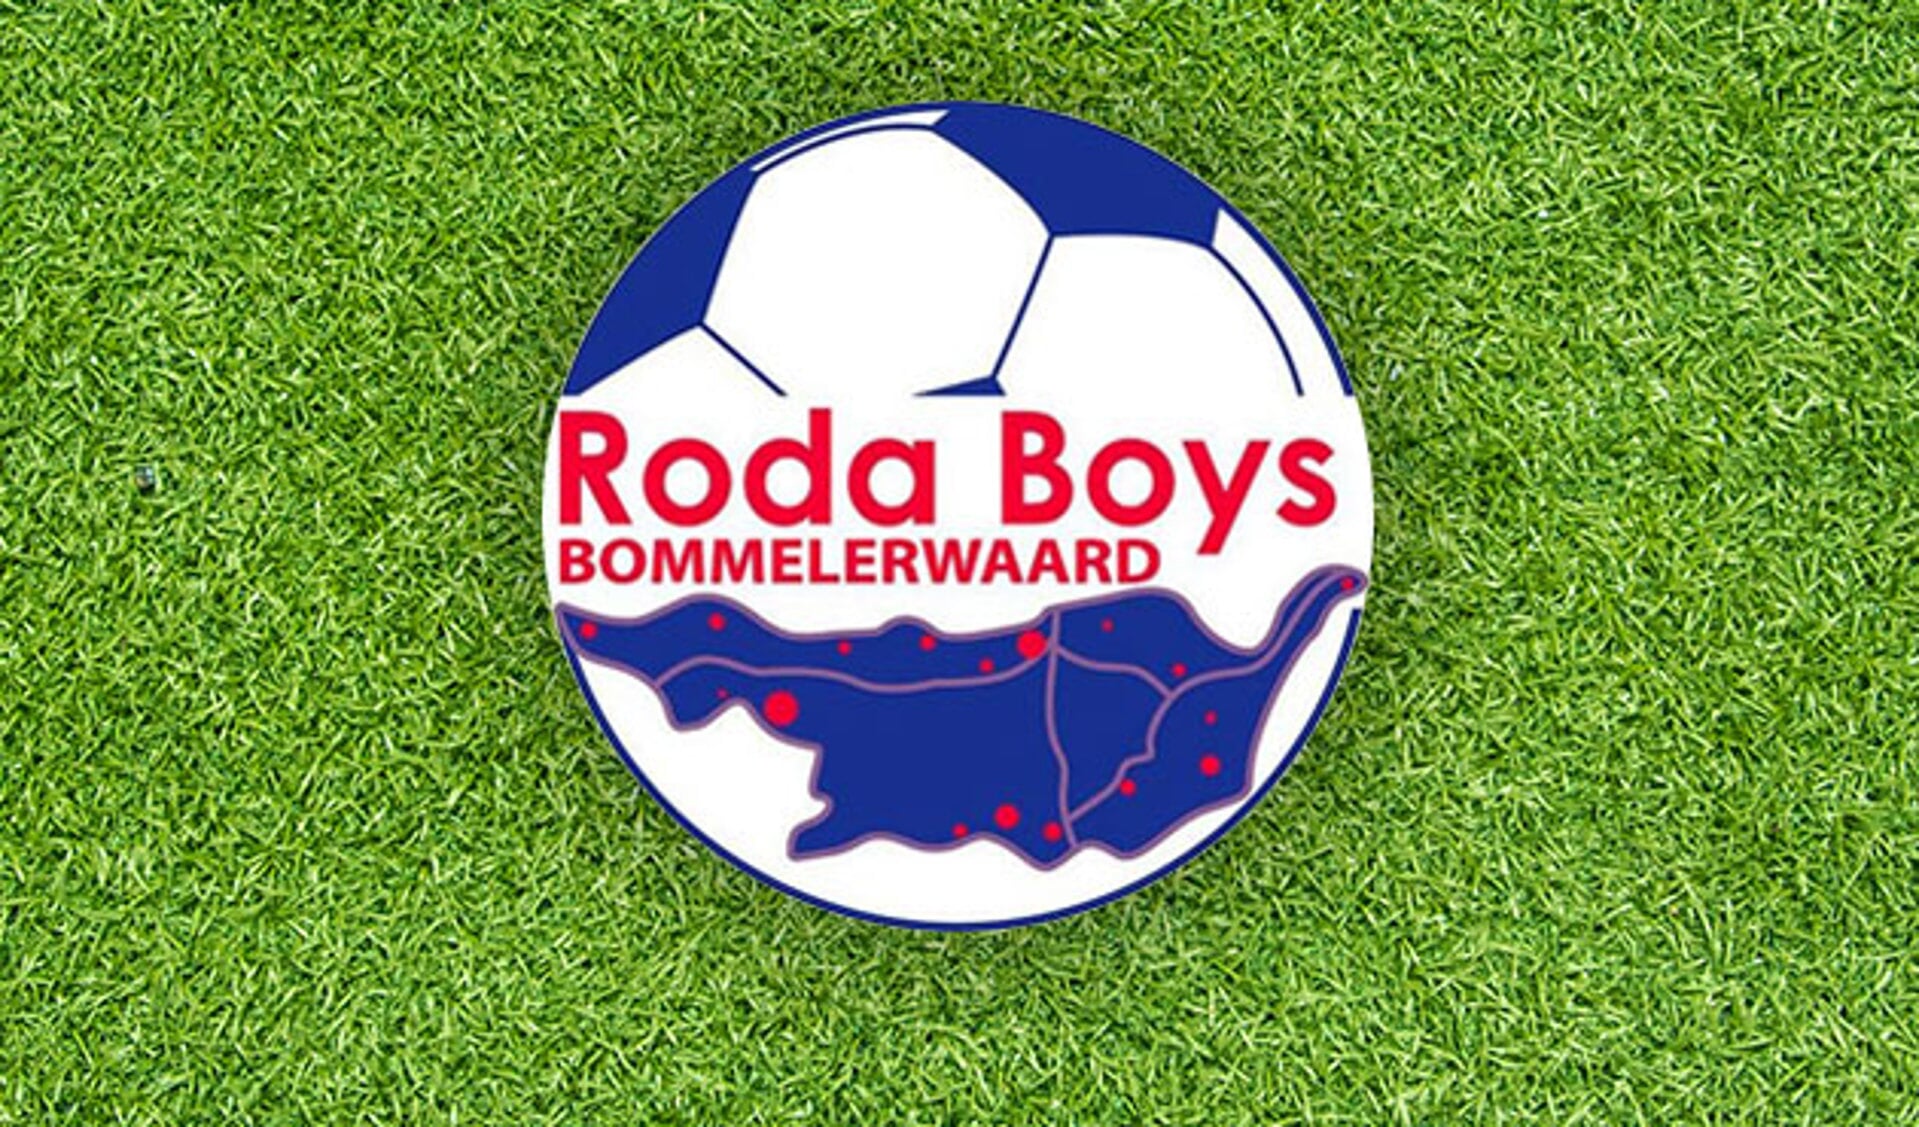 Frank Brands nieuwe trainer Roda Boys/Bommelerwaard